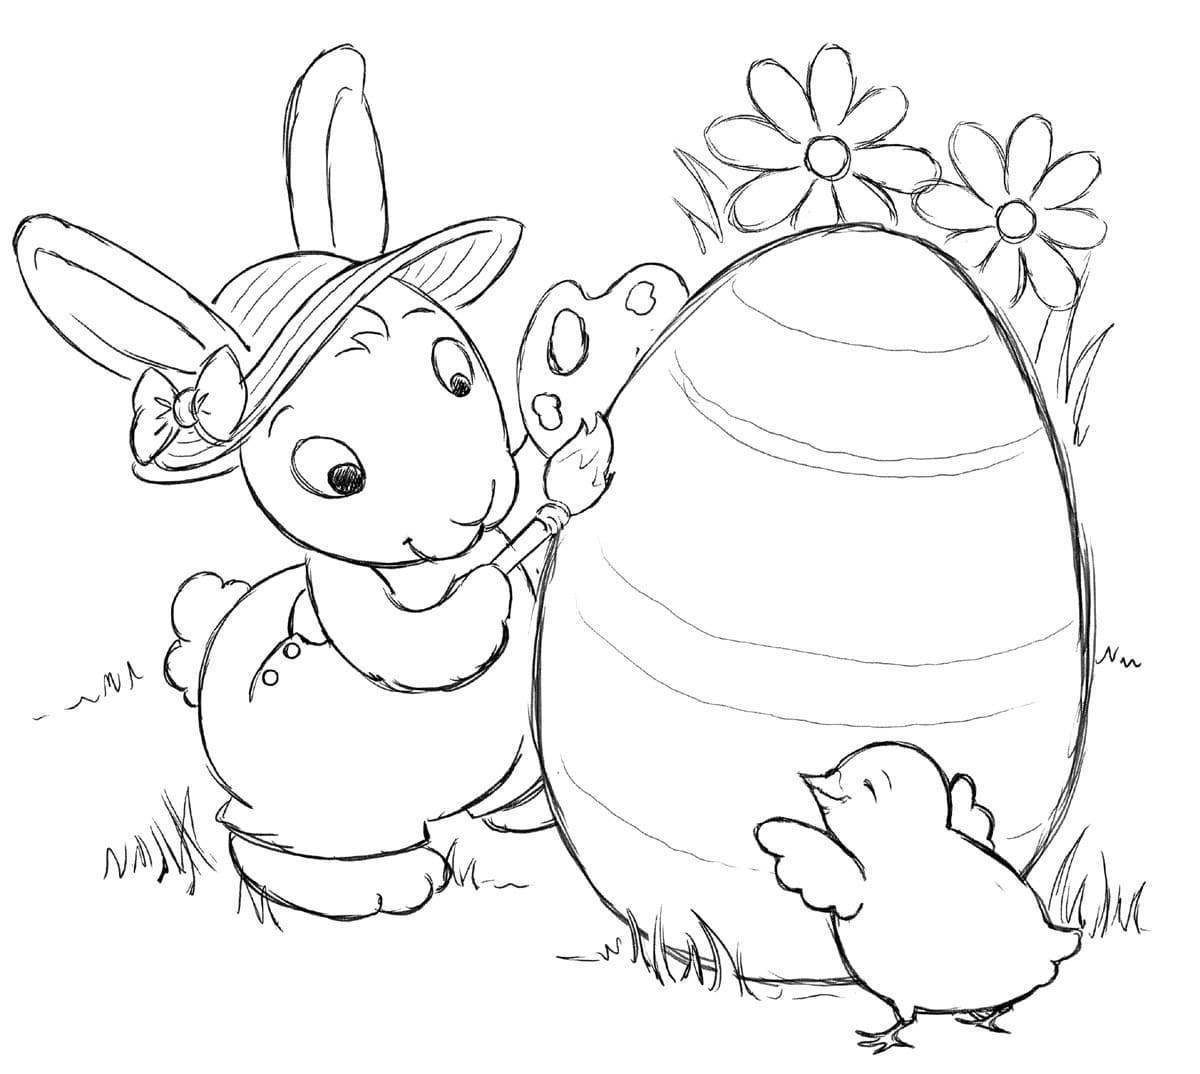 Fun Easter coloring book